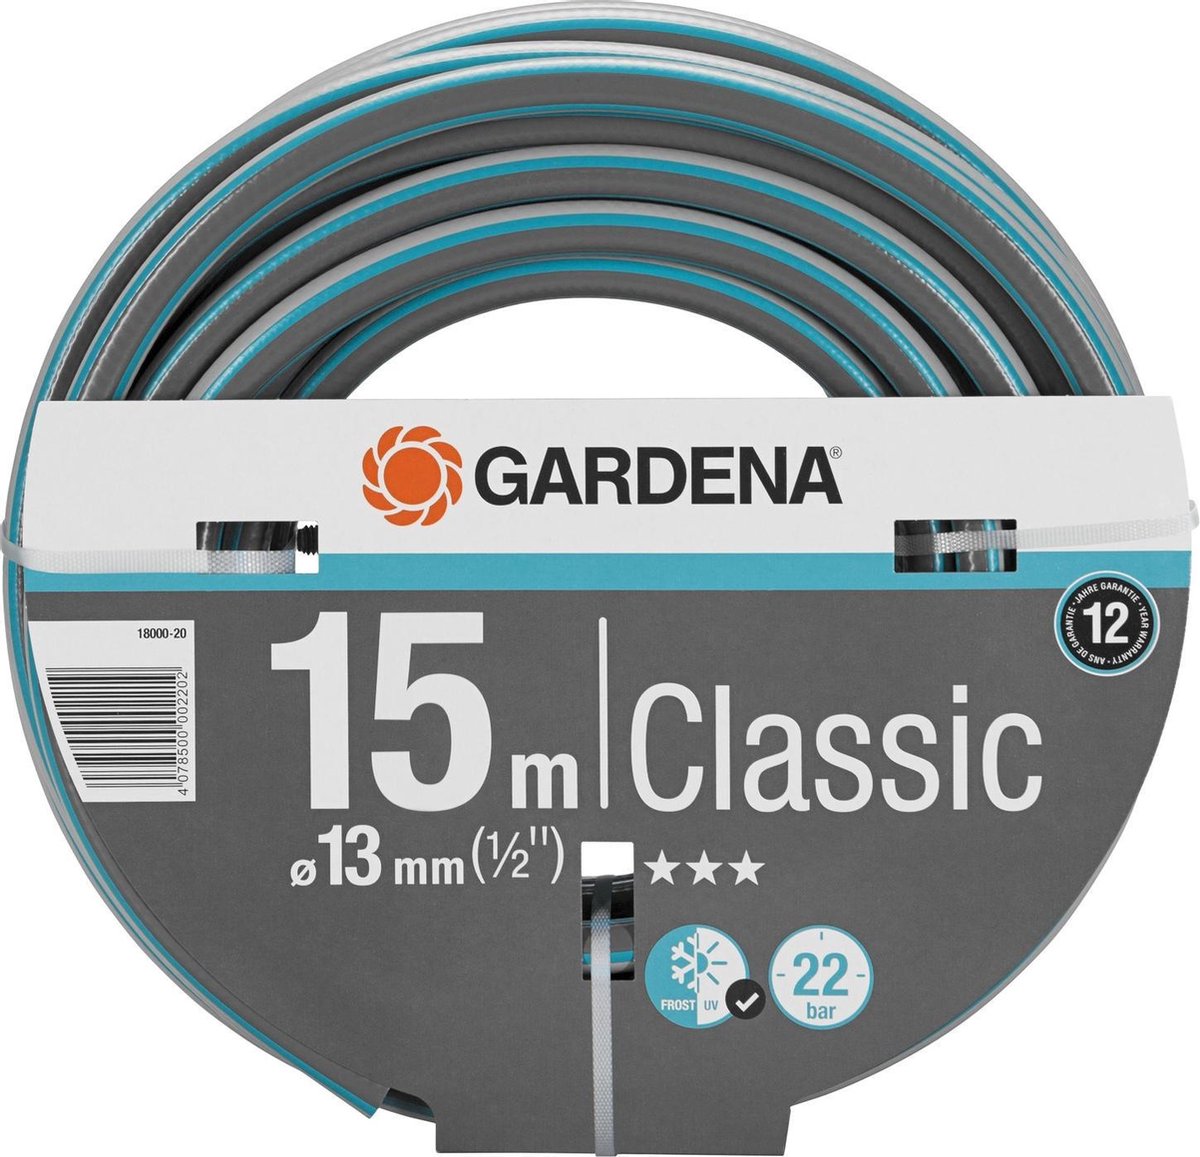 GARDENA Classic Tuinslang 1/2-13mm - 15 meter - GARDENA